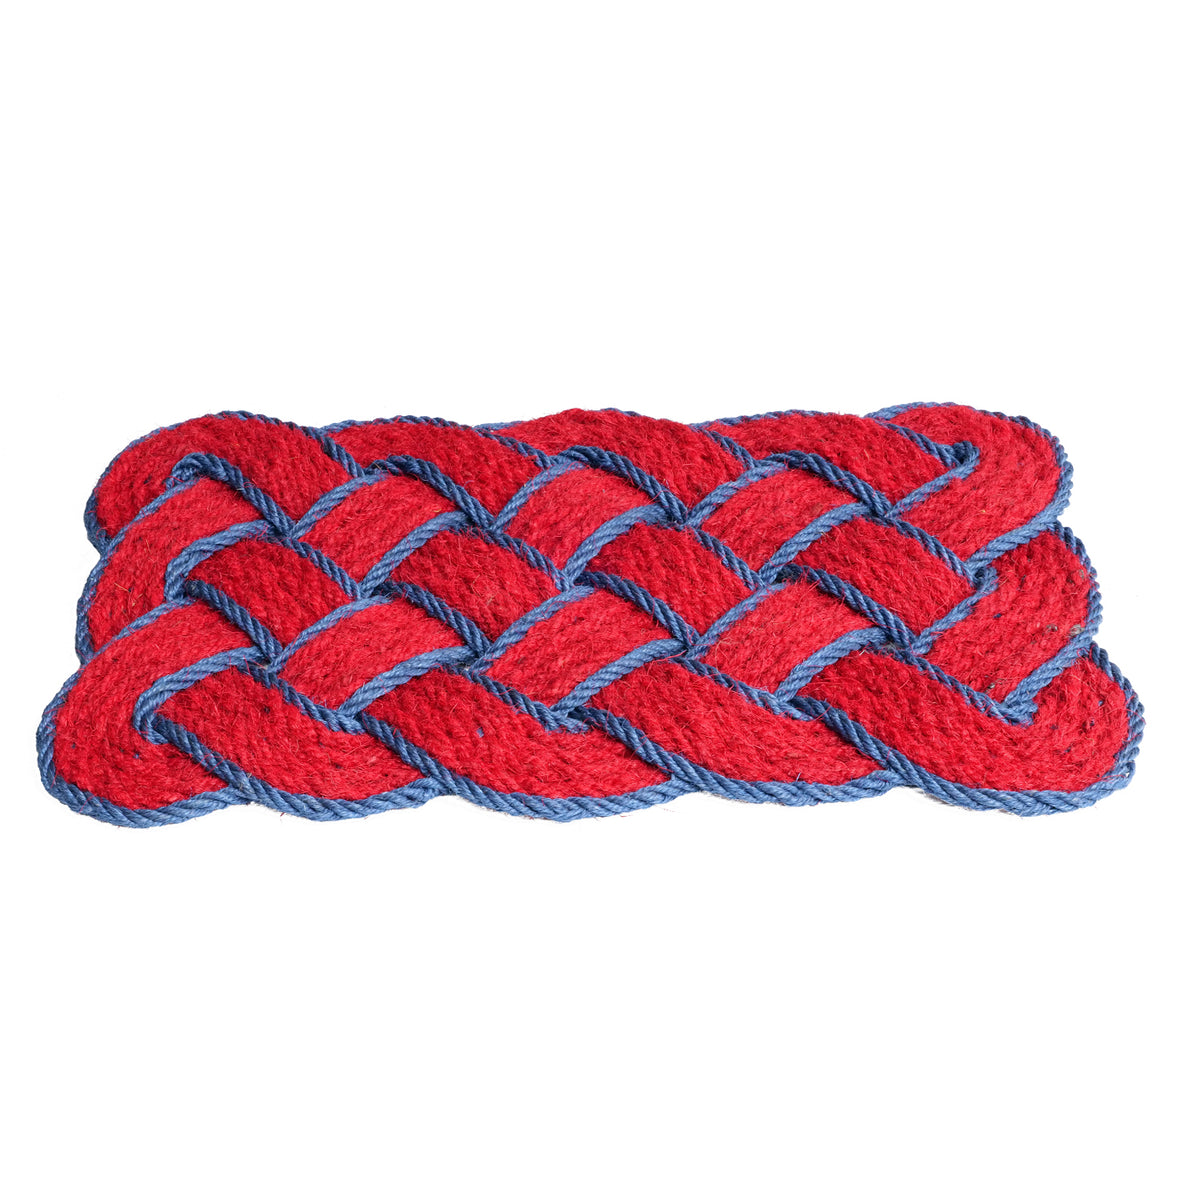 OnlyMat Red and Blue Lovers Knot - 100% Natural Handloom Coir Mat - Indoor / Outdoor